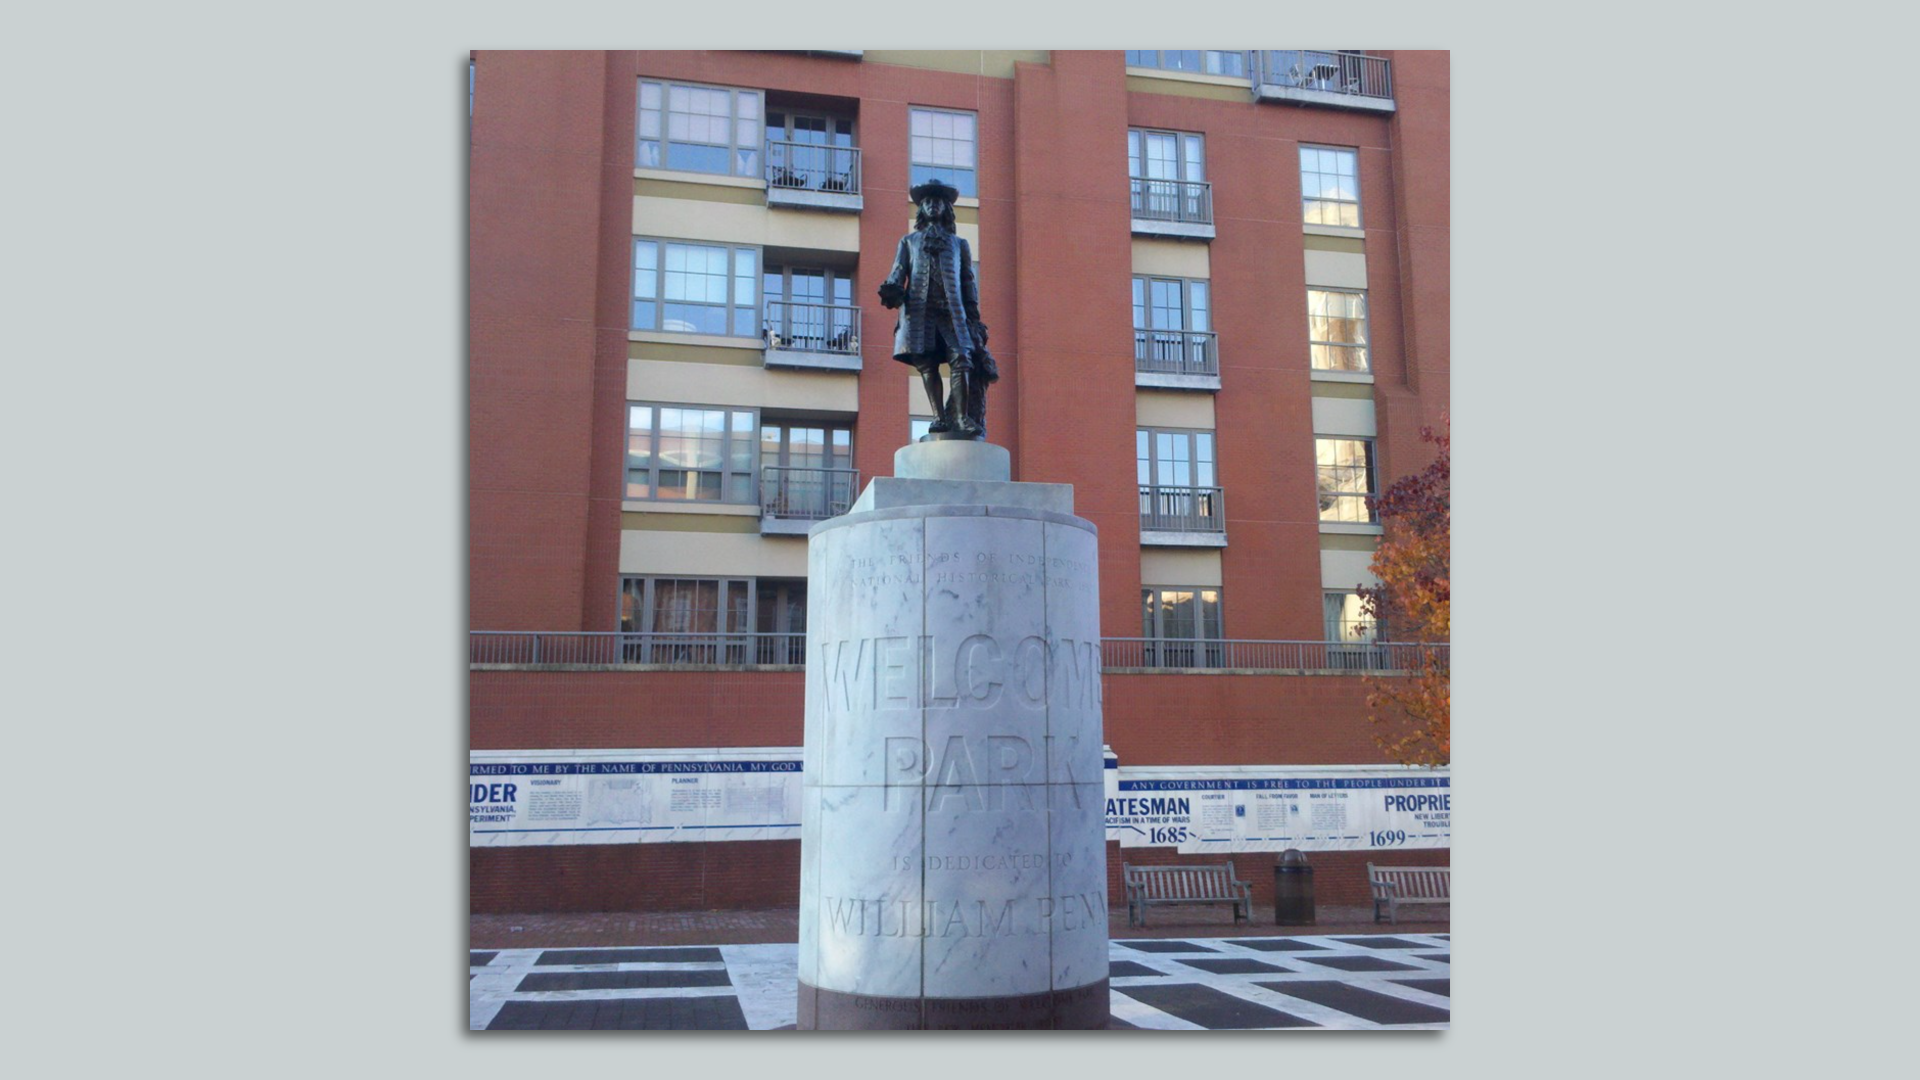 A statue of William Penn in Philadelphia 